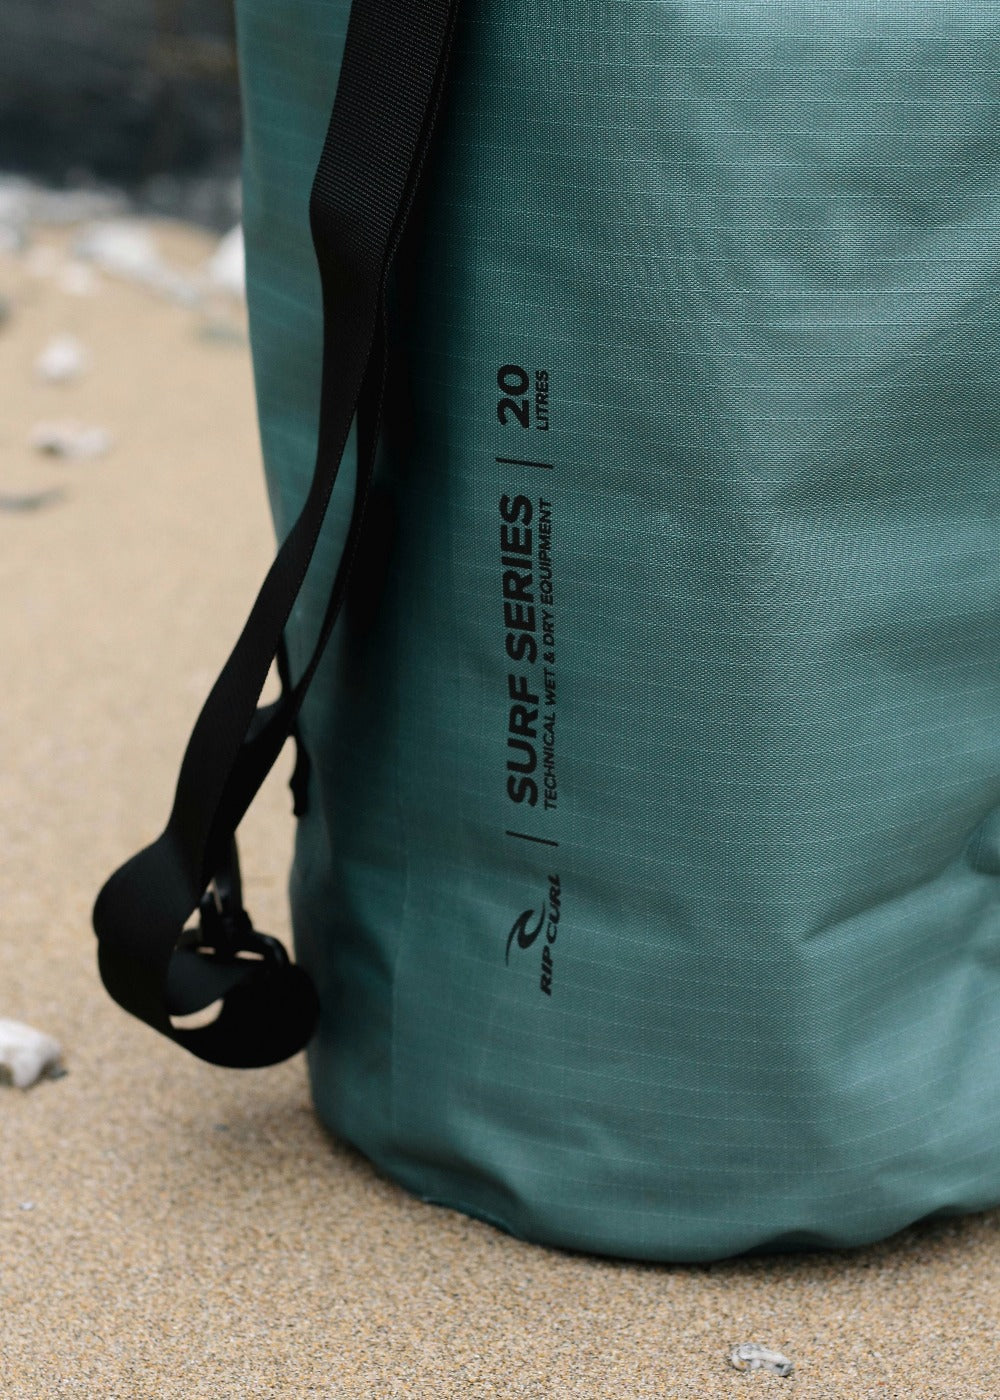 Surf Series 20L Barrel Bag by Rip Curl